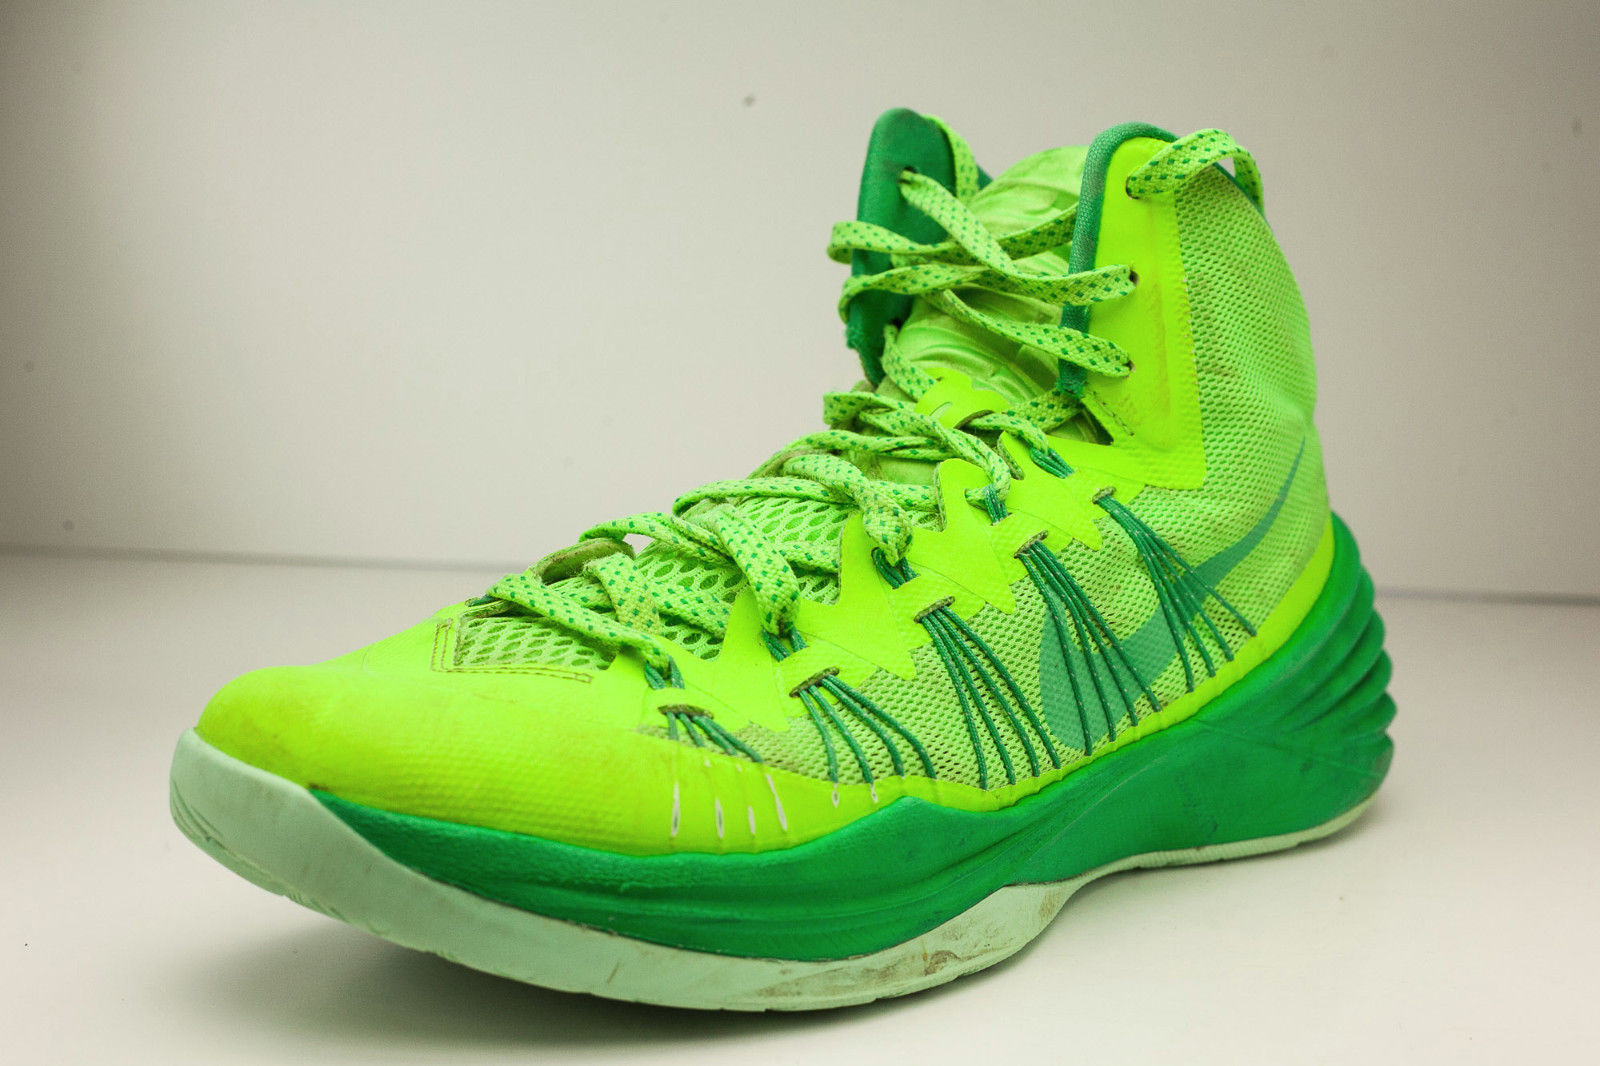 Nike Hyperdunk Sz 9 Green 2014 Mens Basketball Shoes